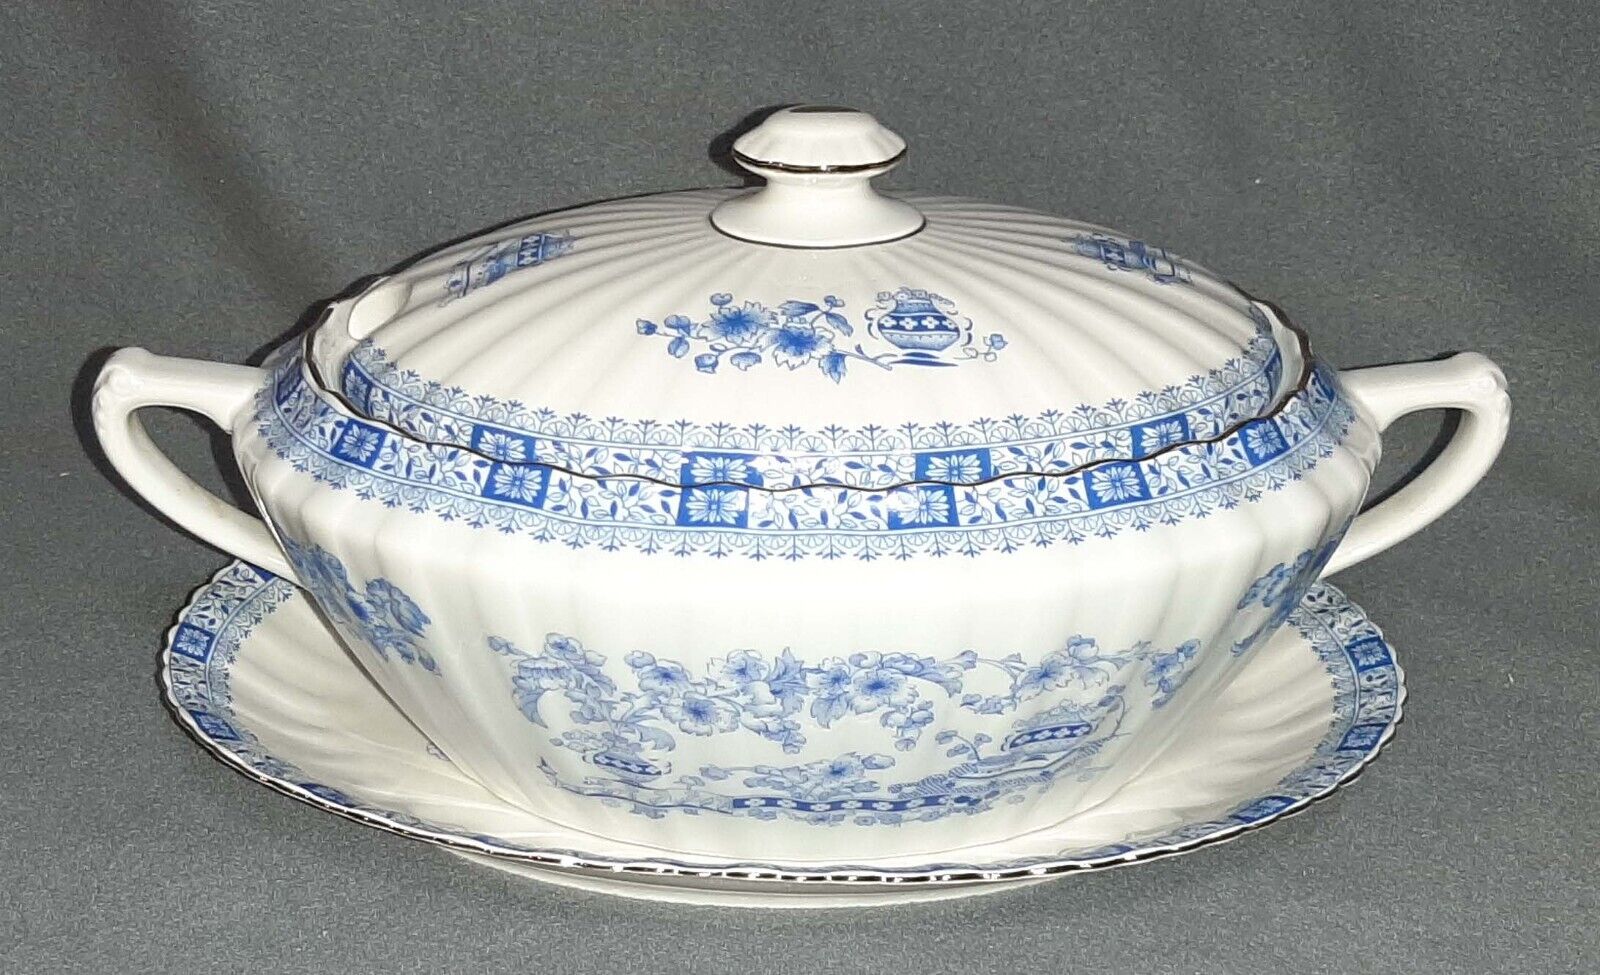 Seltman Qualitats Porzellan China Blau - Soup Tureen and Oval Underplate Platter